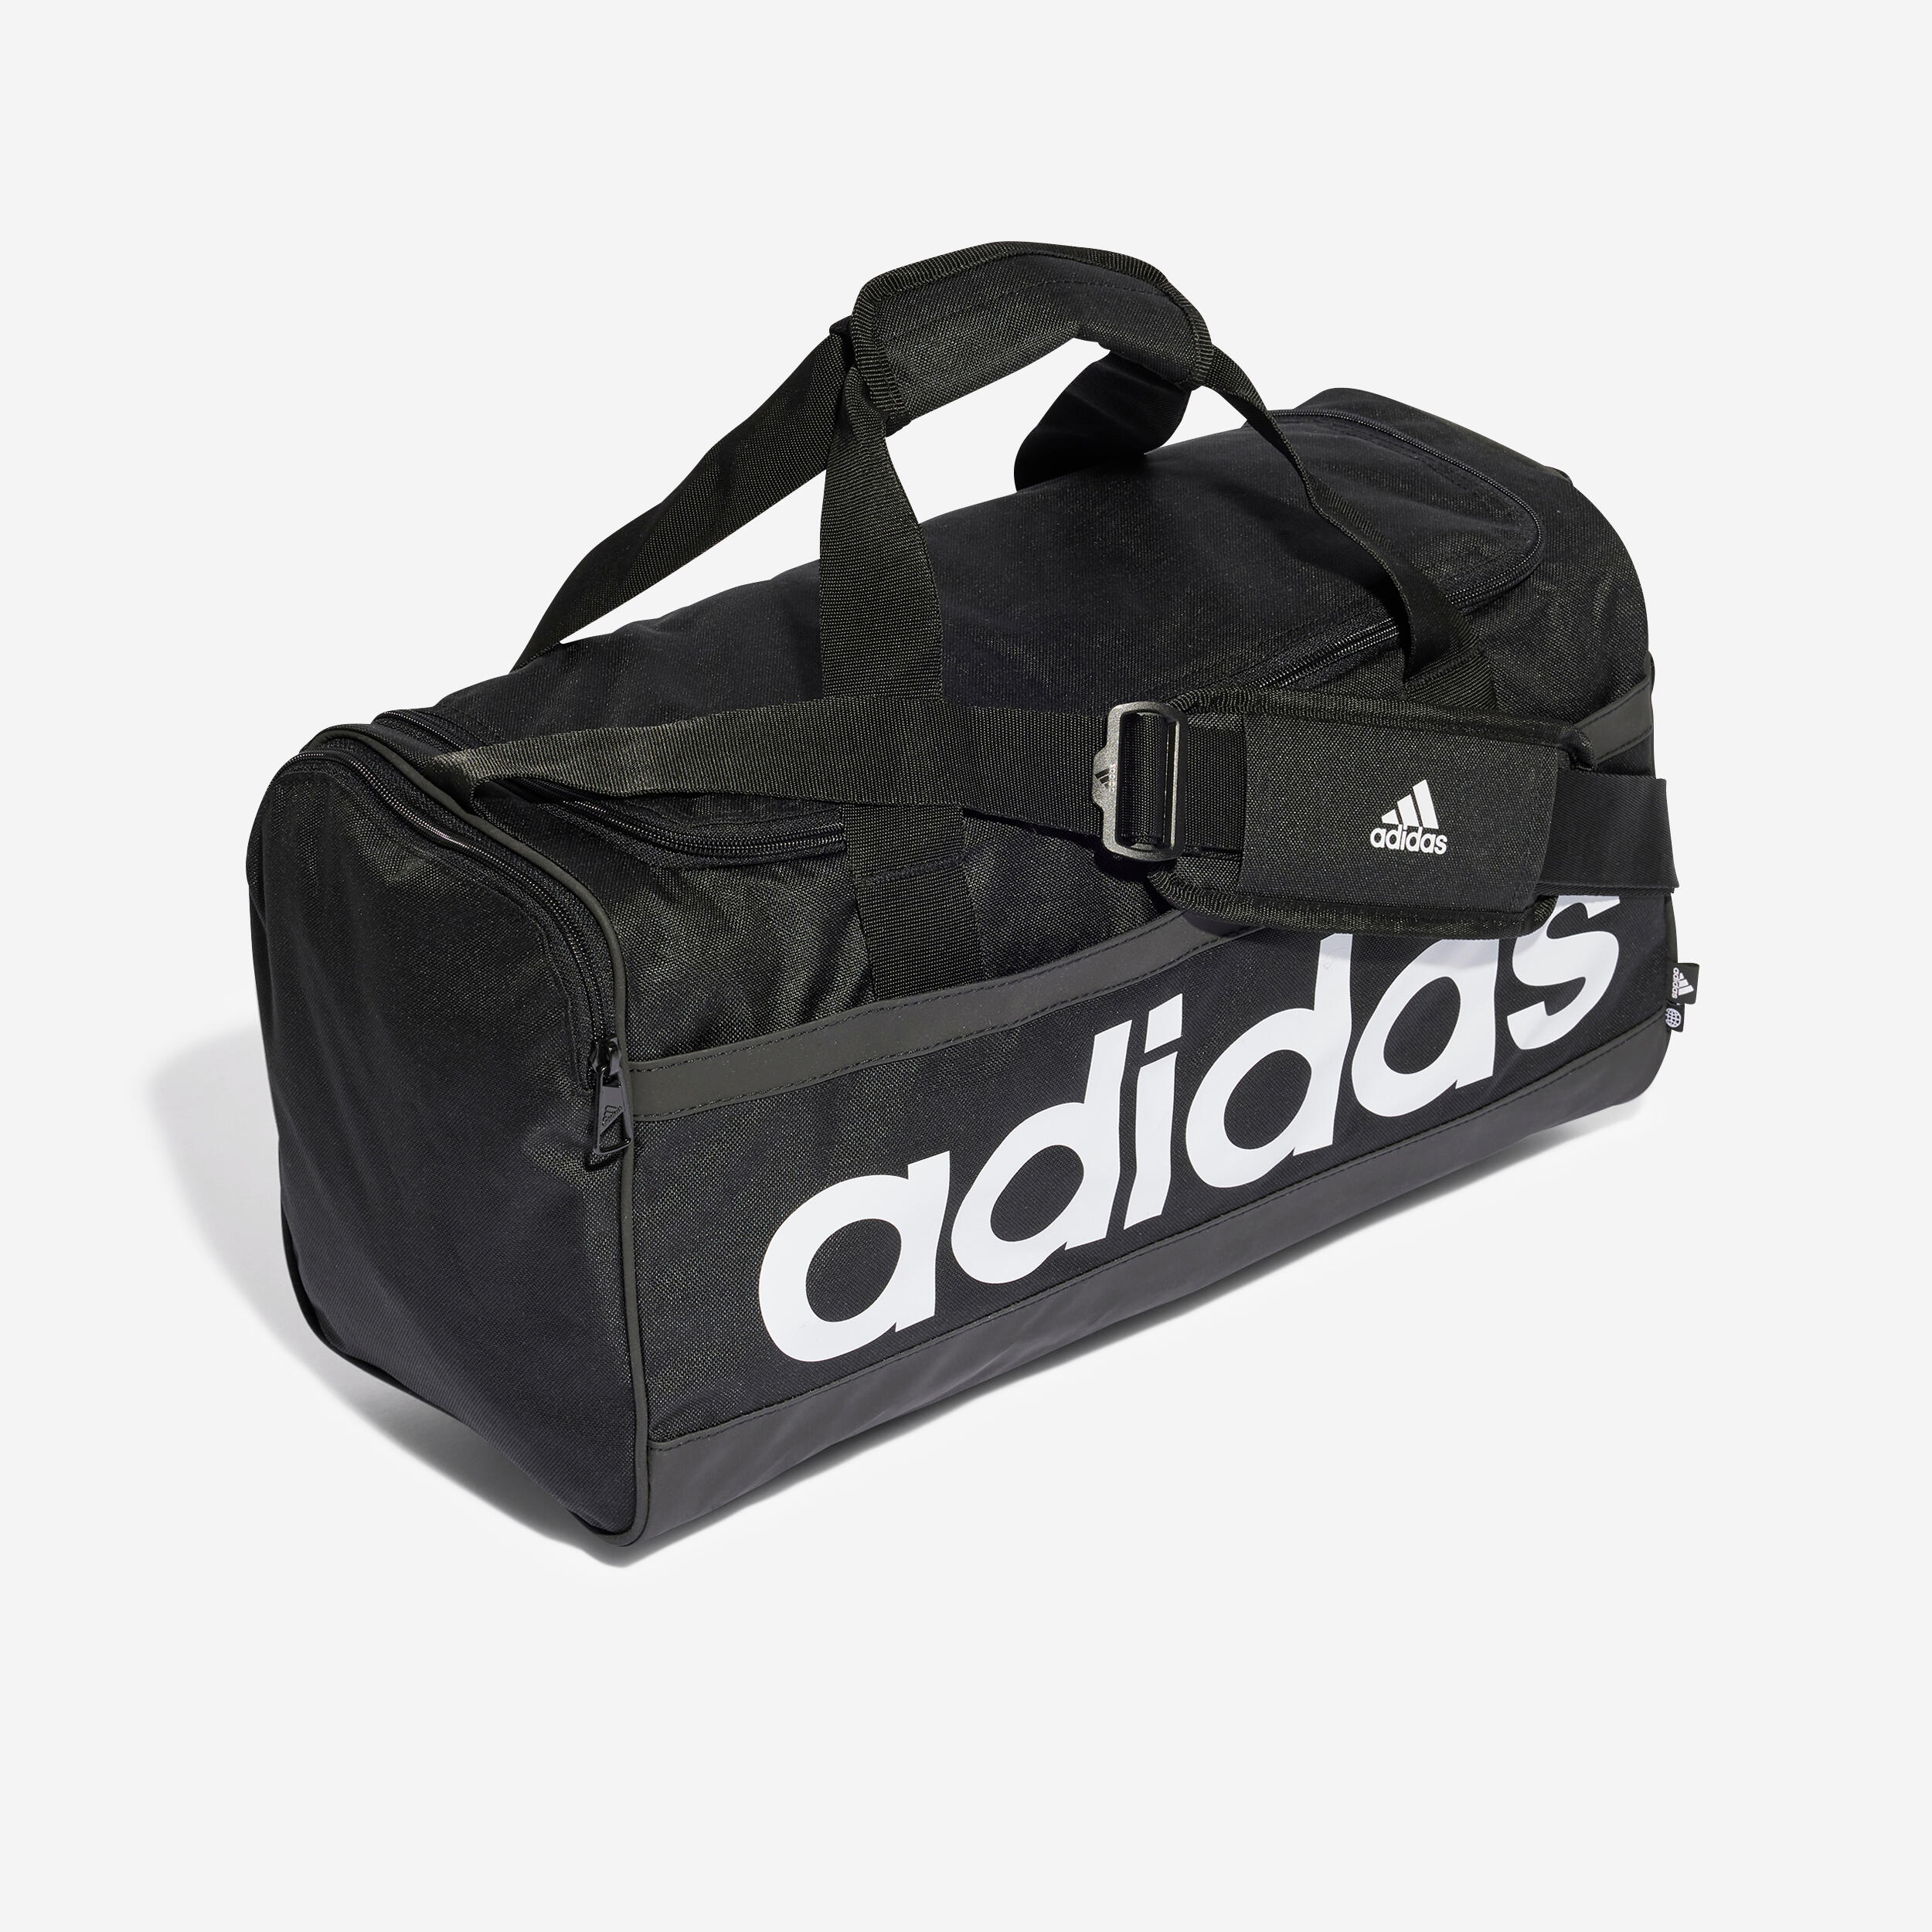 Duffle Bag Size S - Black/White 1/4